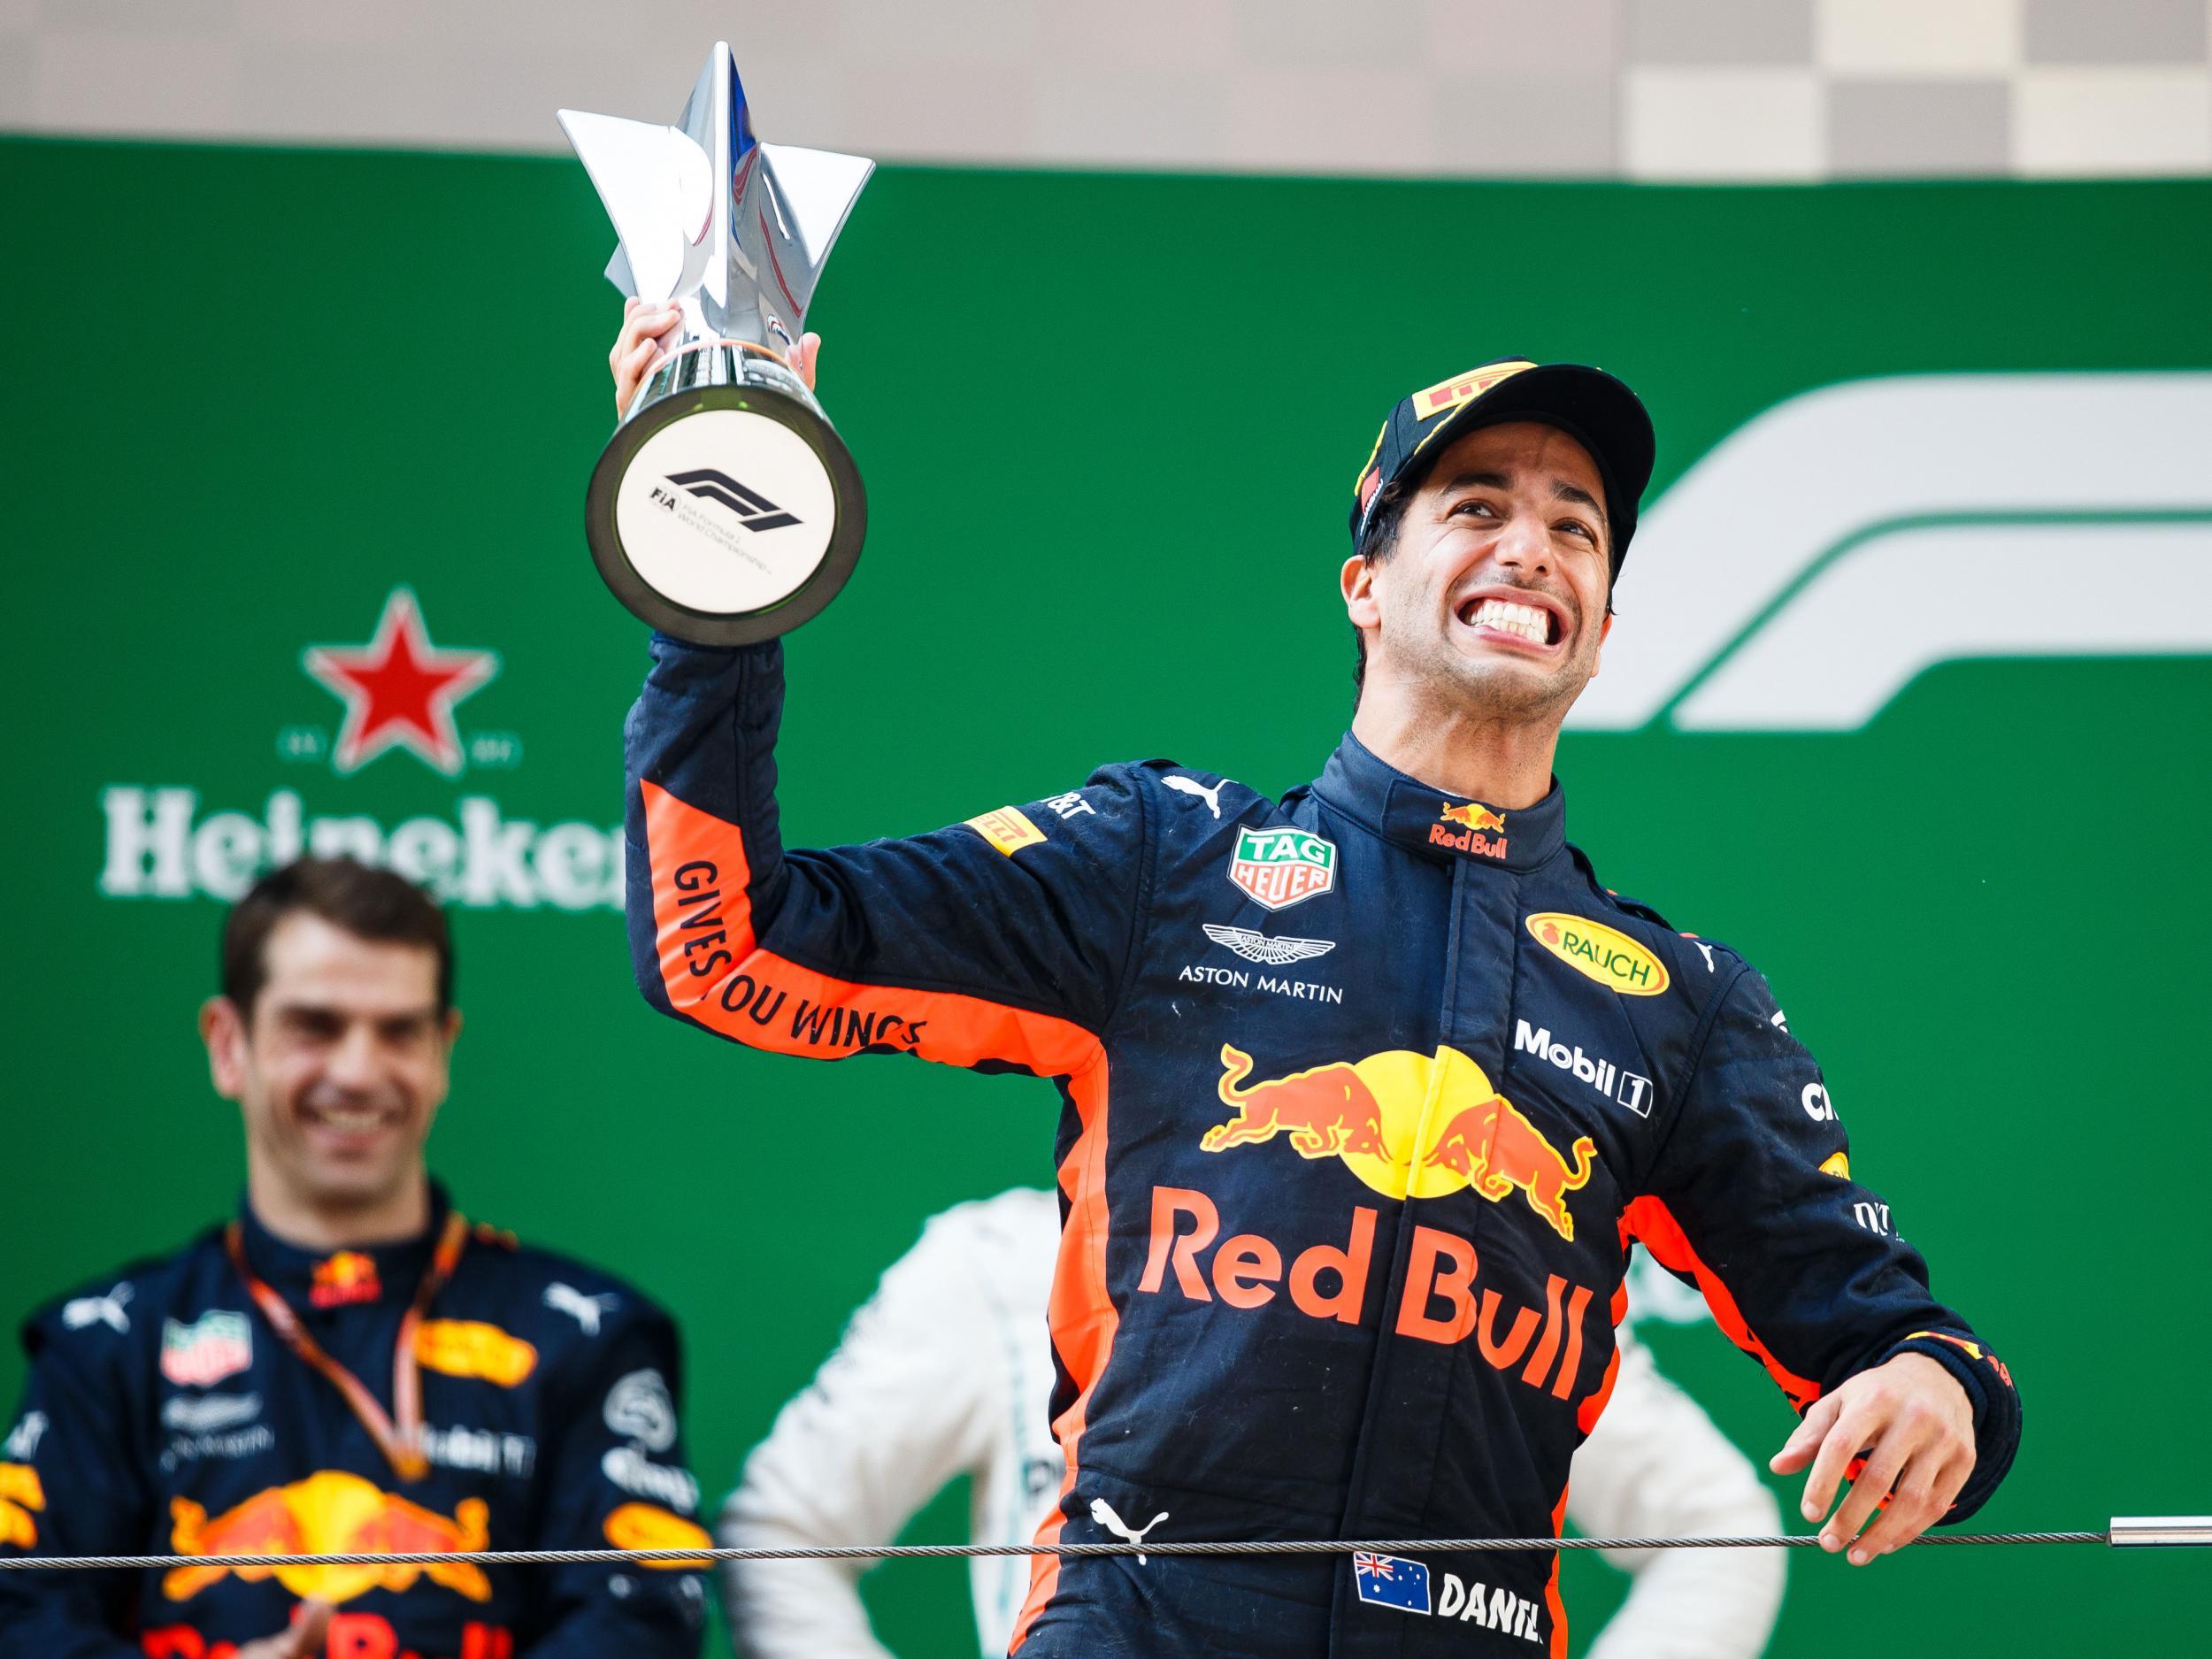 &#13;
Ricciardo celebrated a sixth Grand Prix win of his career &#13;